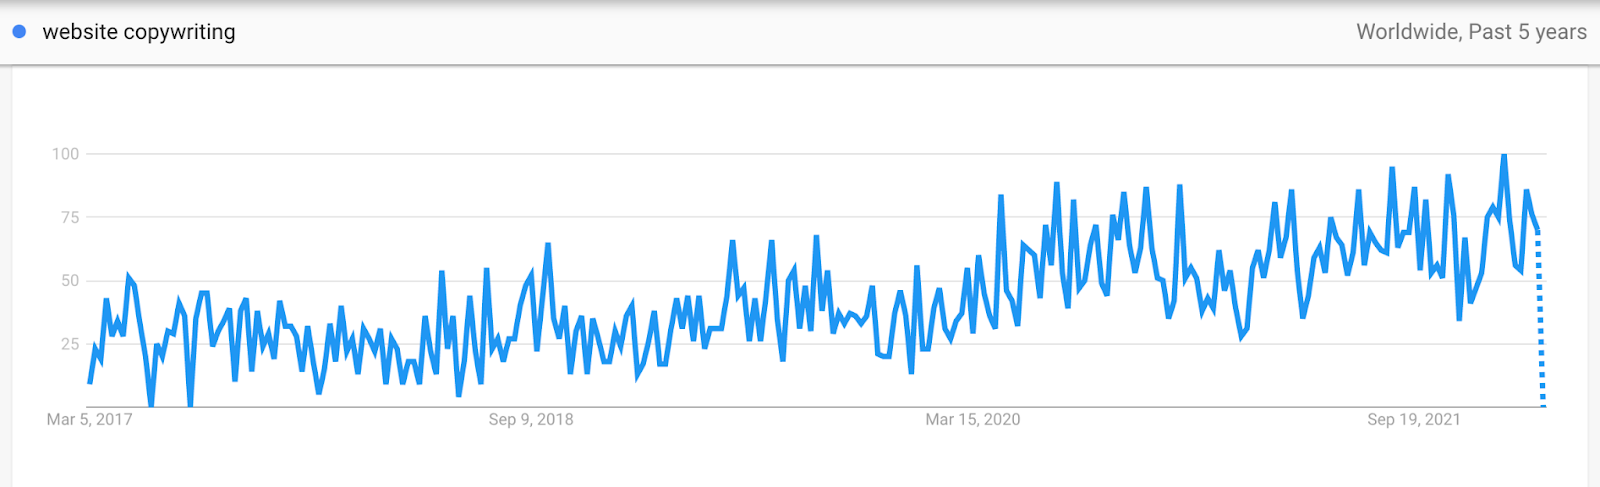 google trends upward data for search term website copywriting